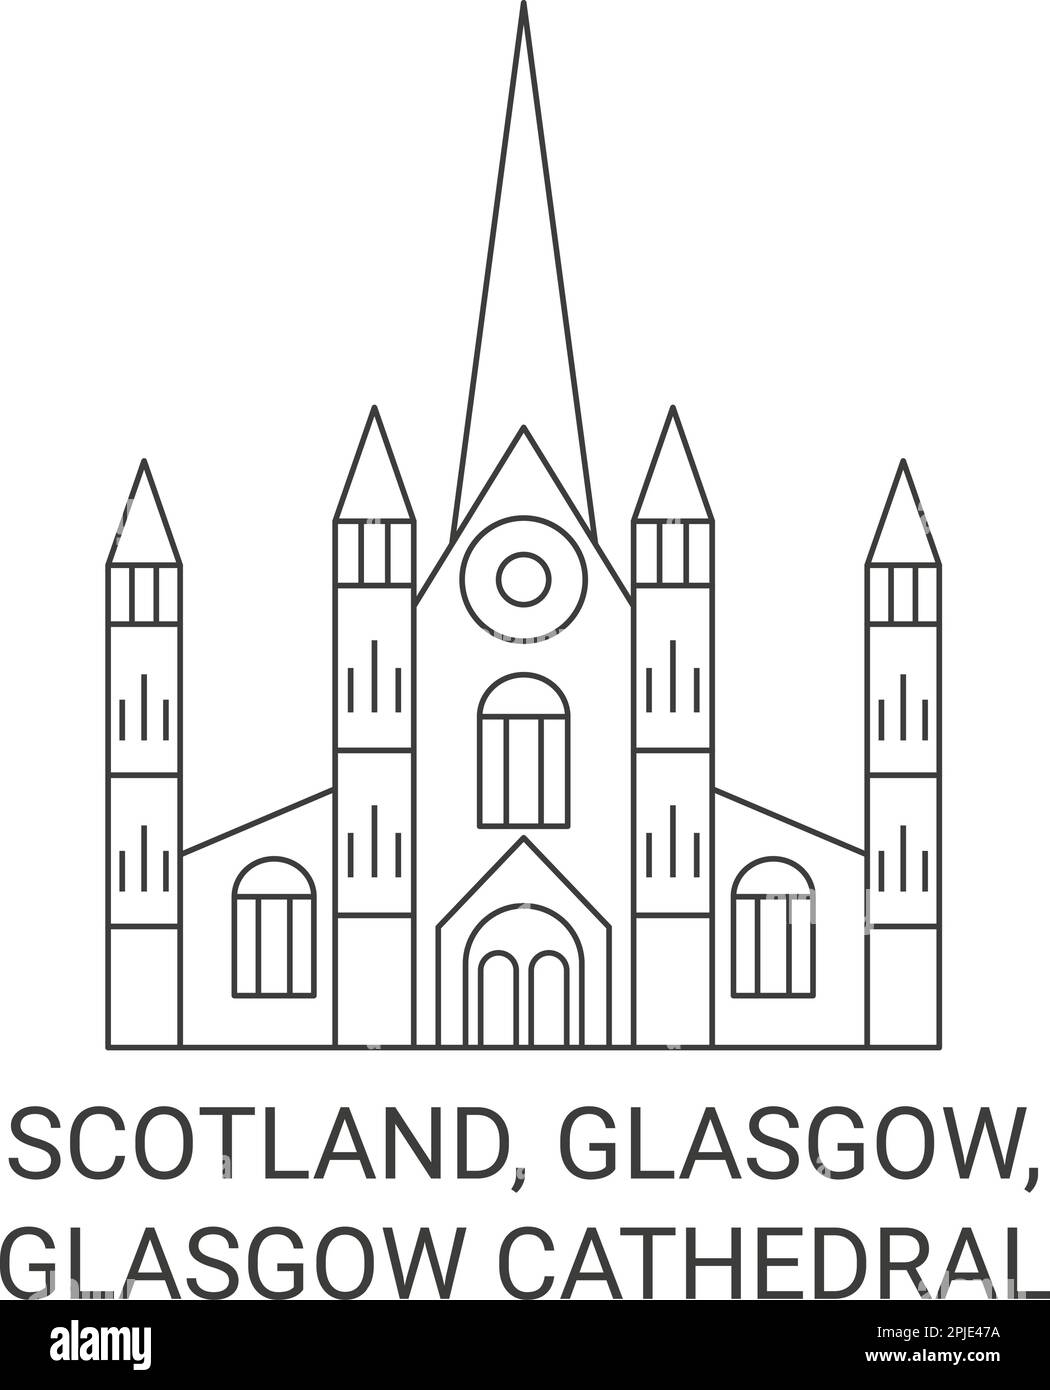 Scotland, Glasgow, Glasgow Cathedral travel landmark vector illustration Stock Vector